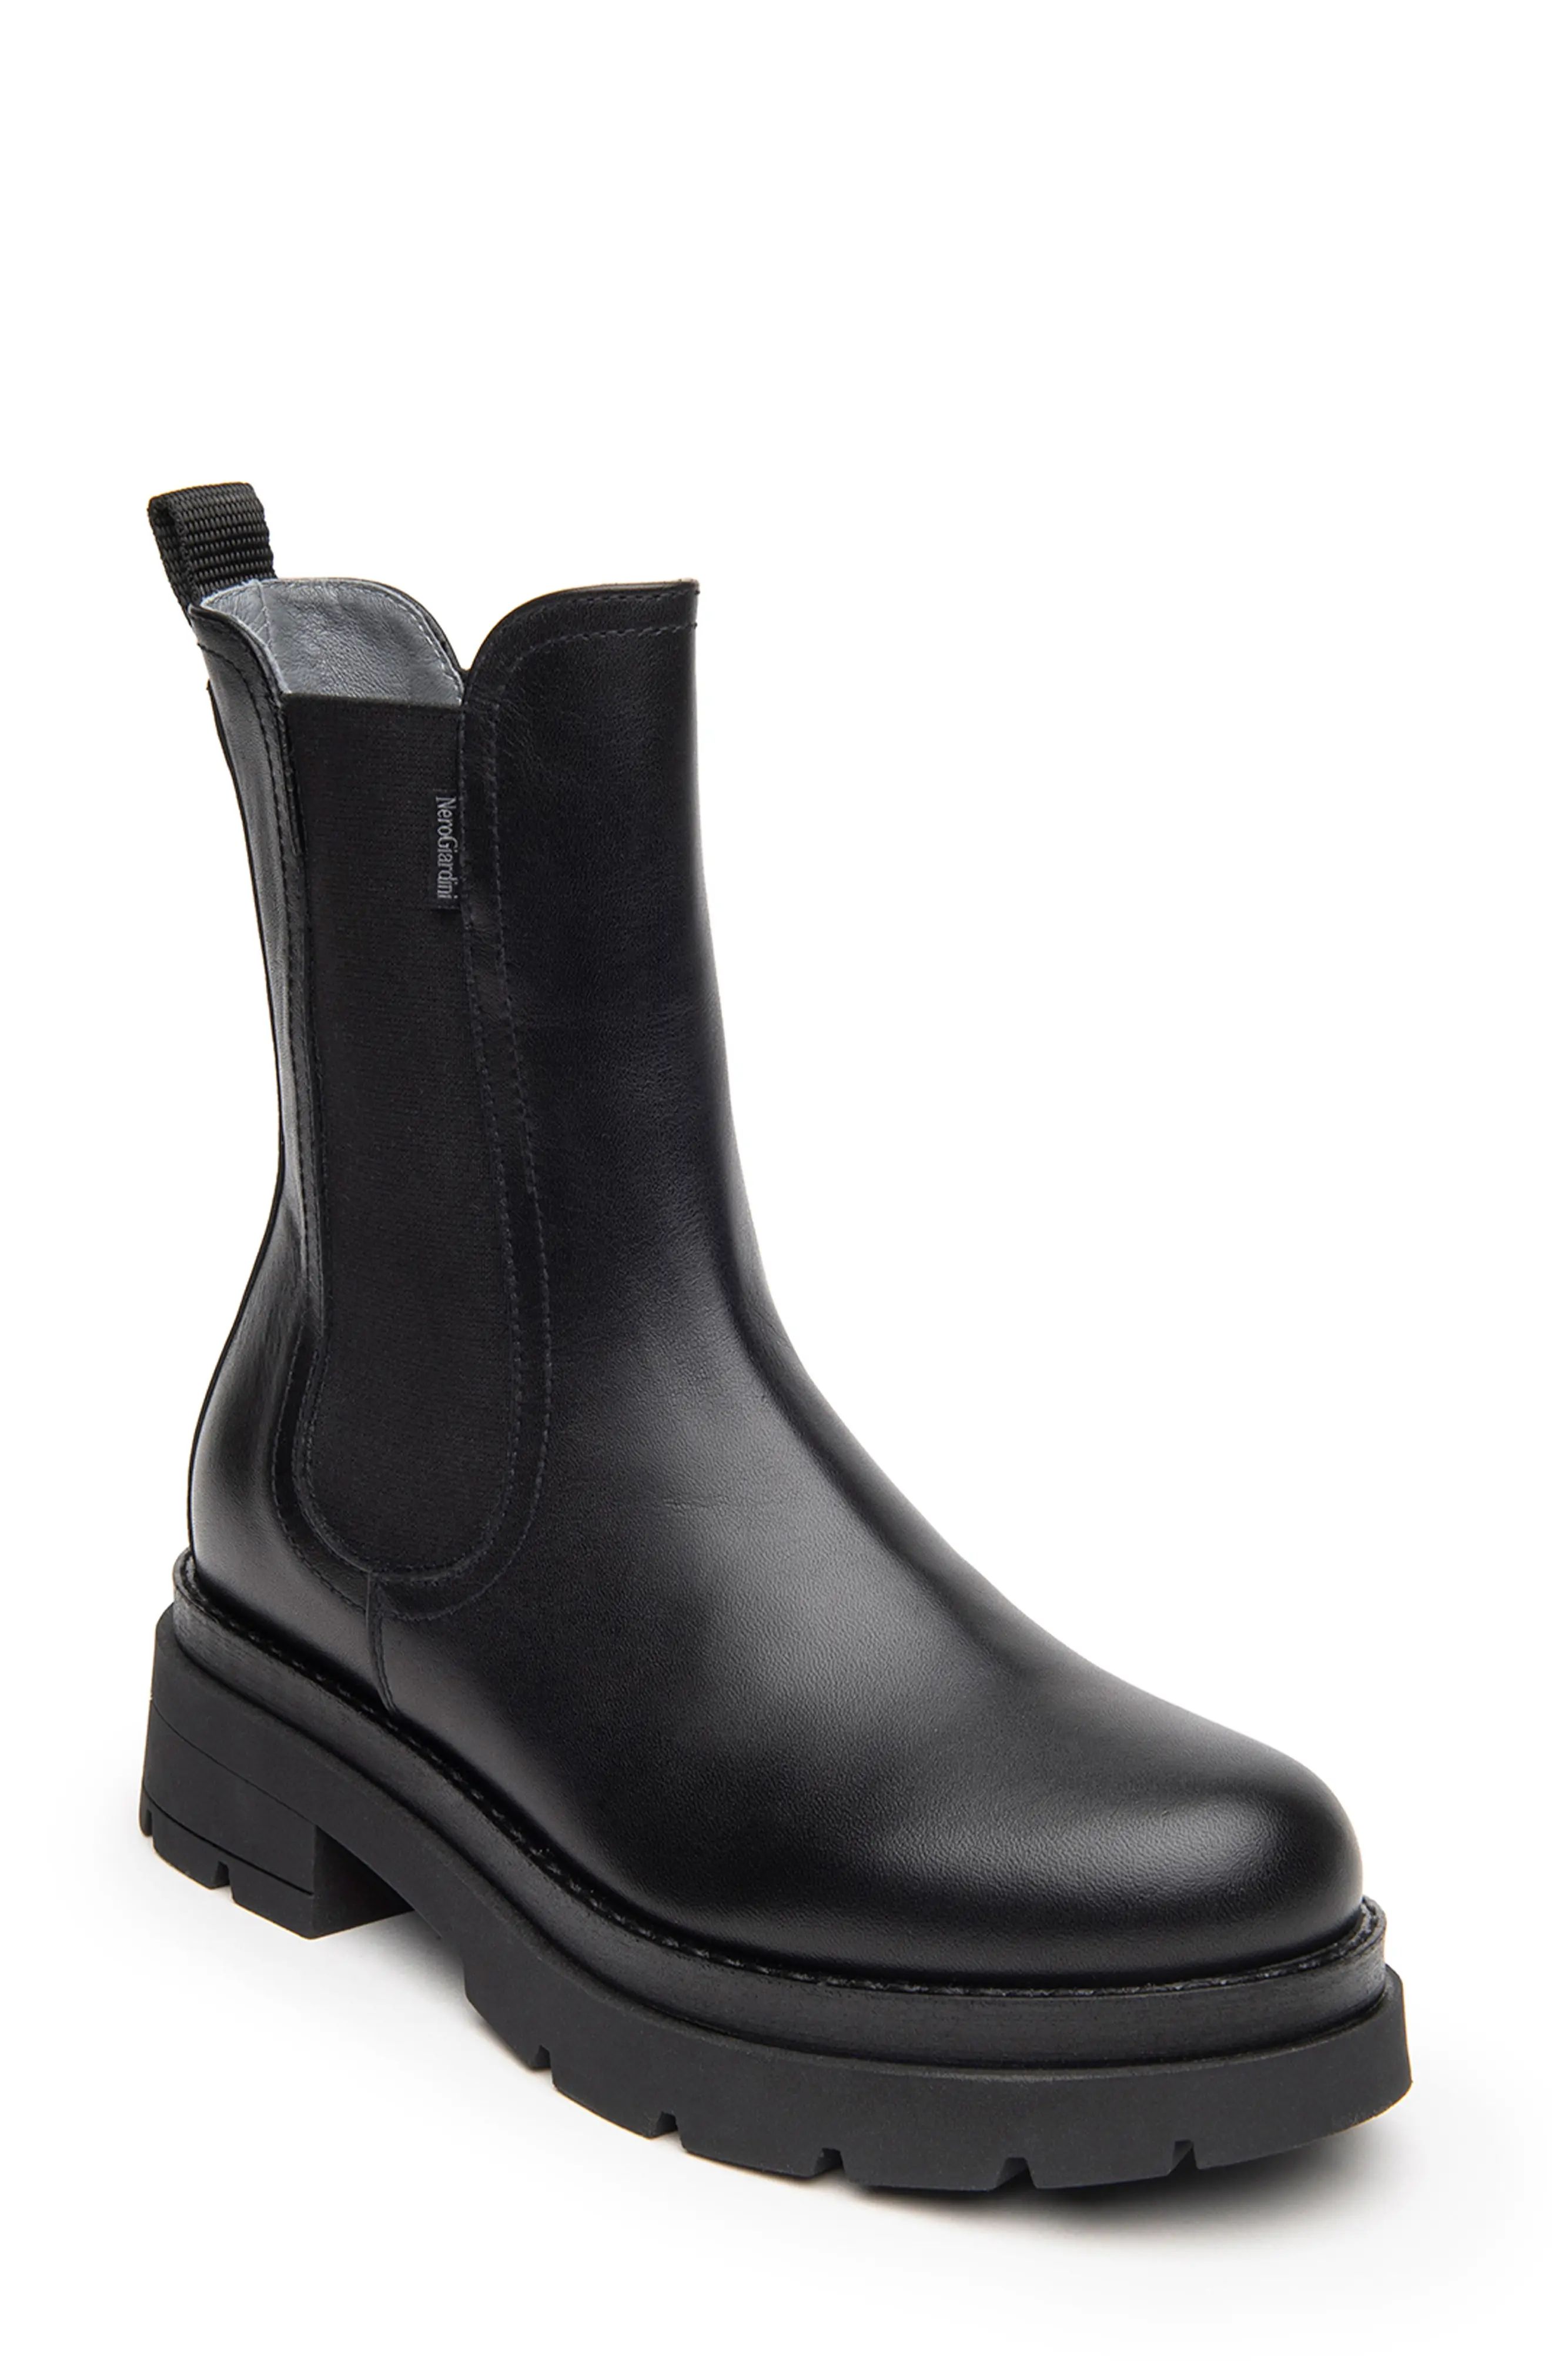 NeroGiardini Lug Sole Chelsea Boot in Black at Nordstrom, Size 7Us | Nordstrom